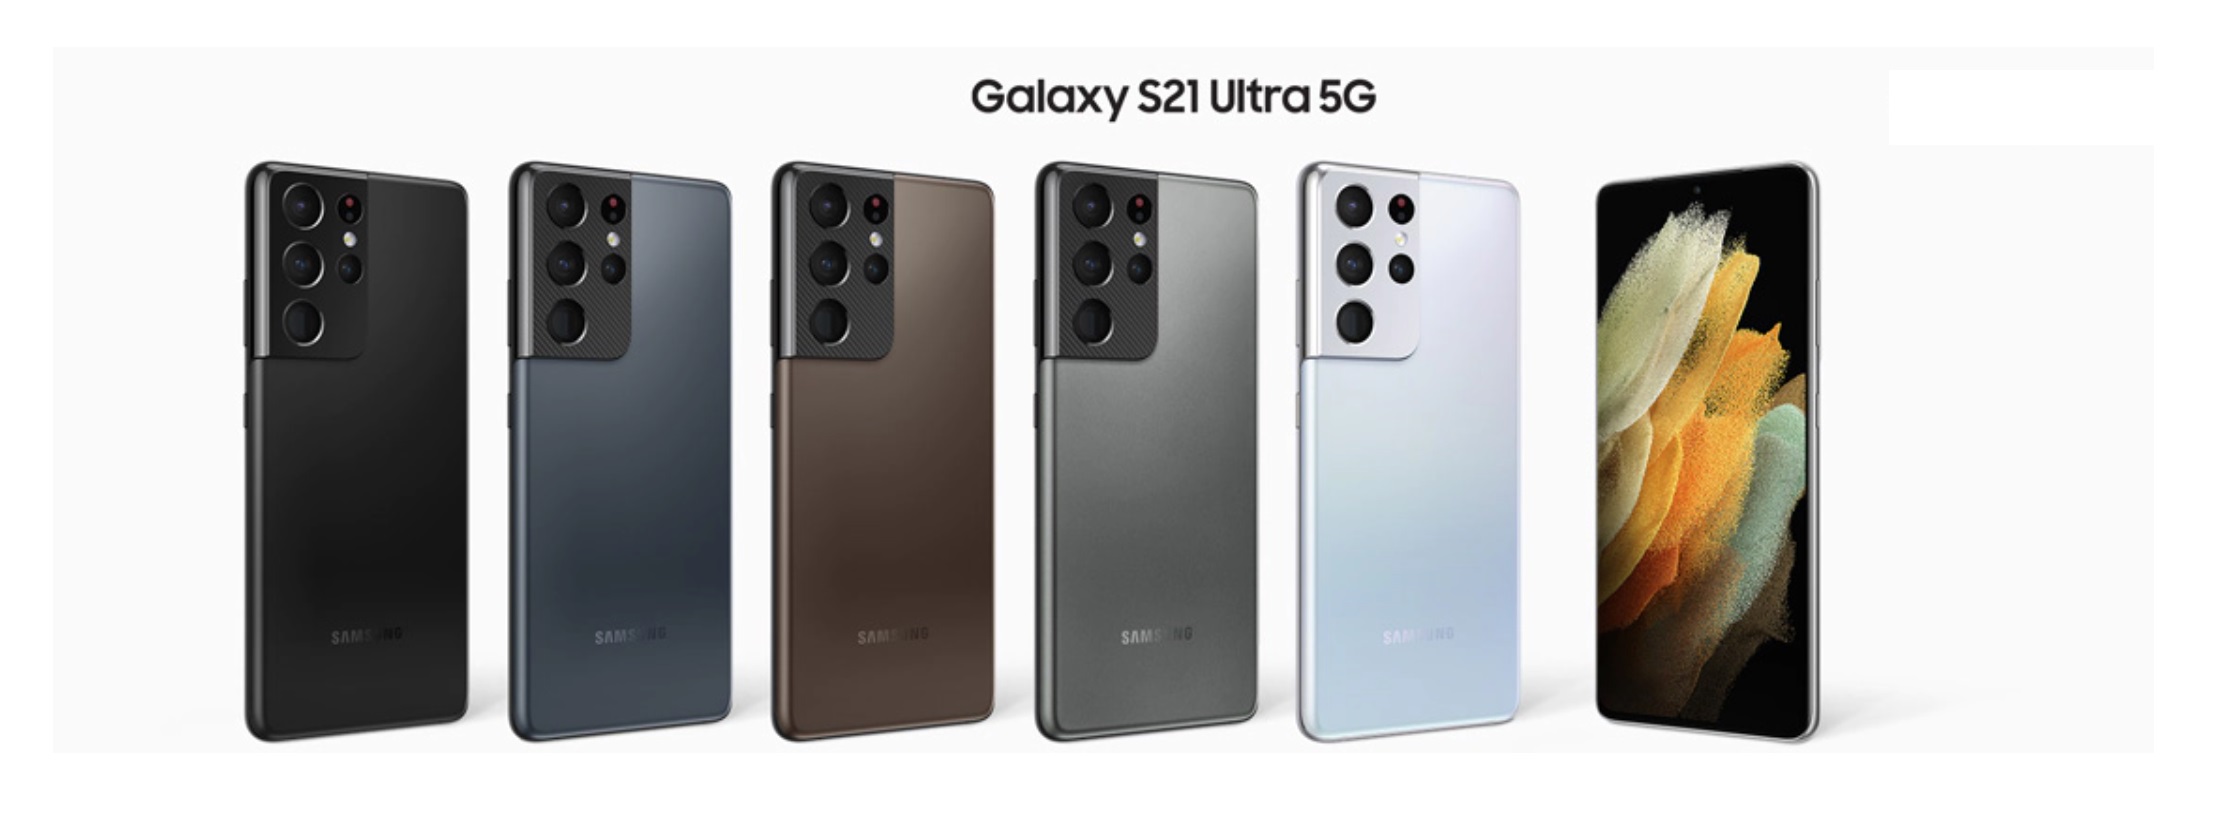 samsung, Galaxy S21 , S21, S21 Ultra 5G, programapublicidad